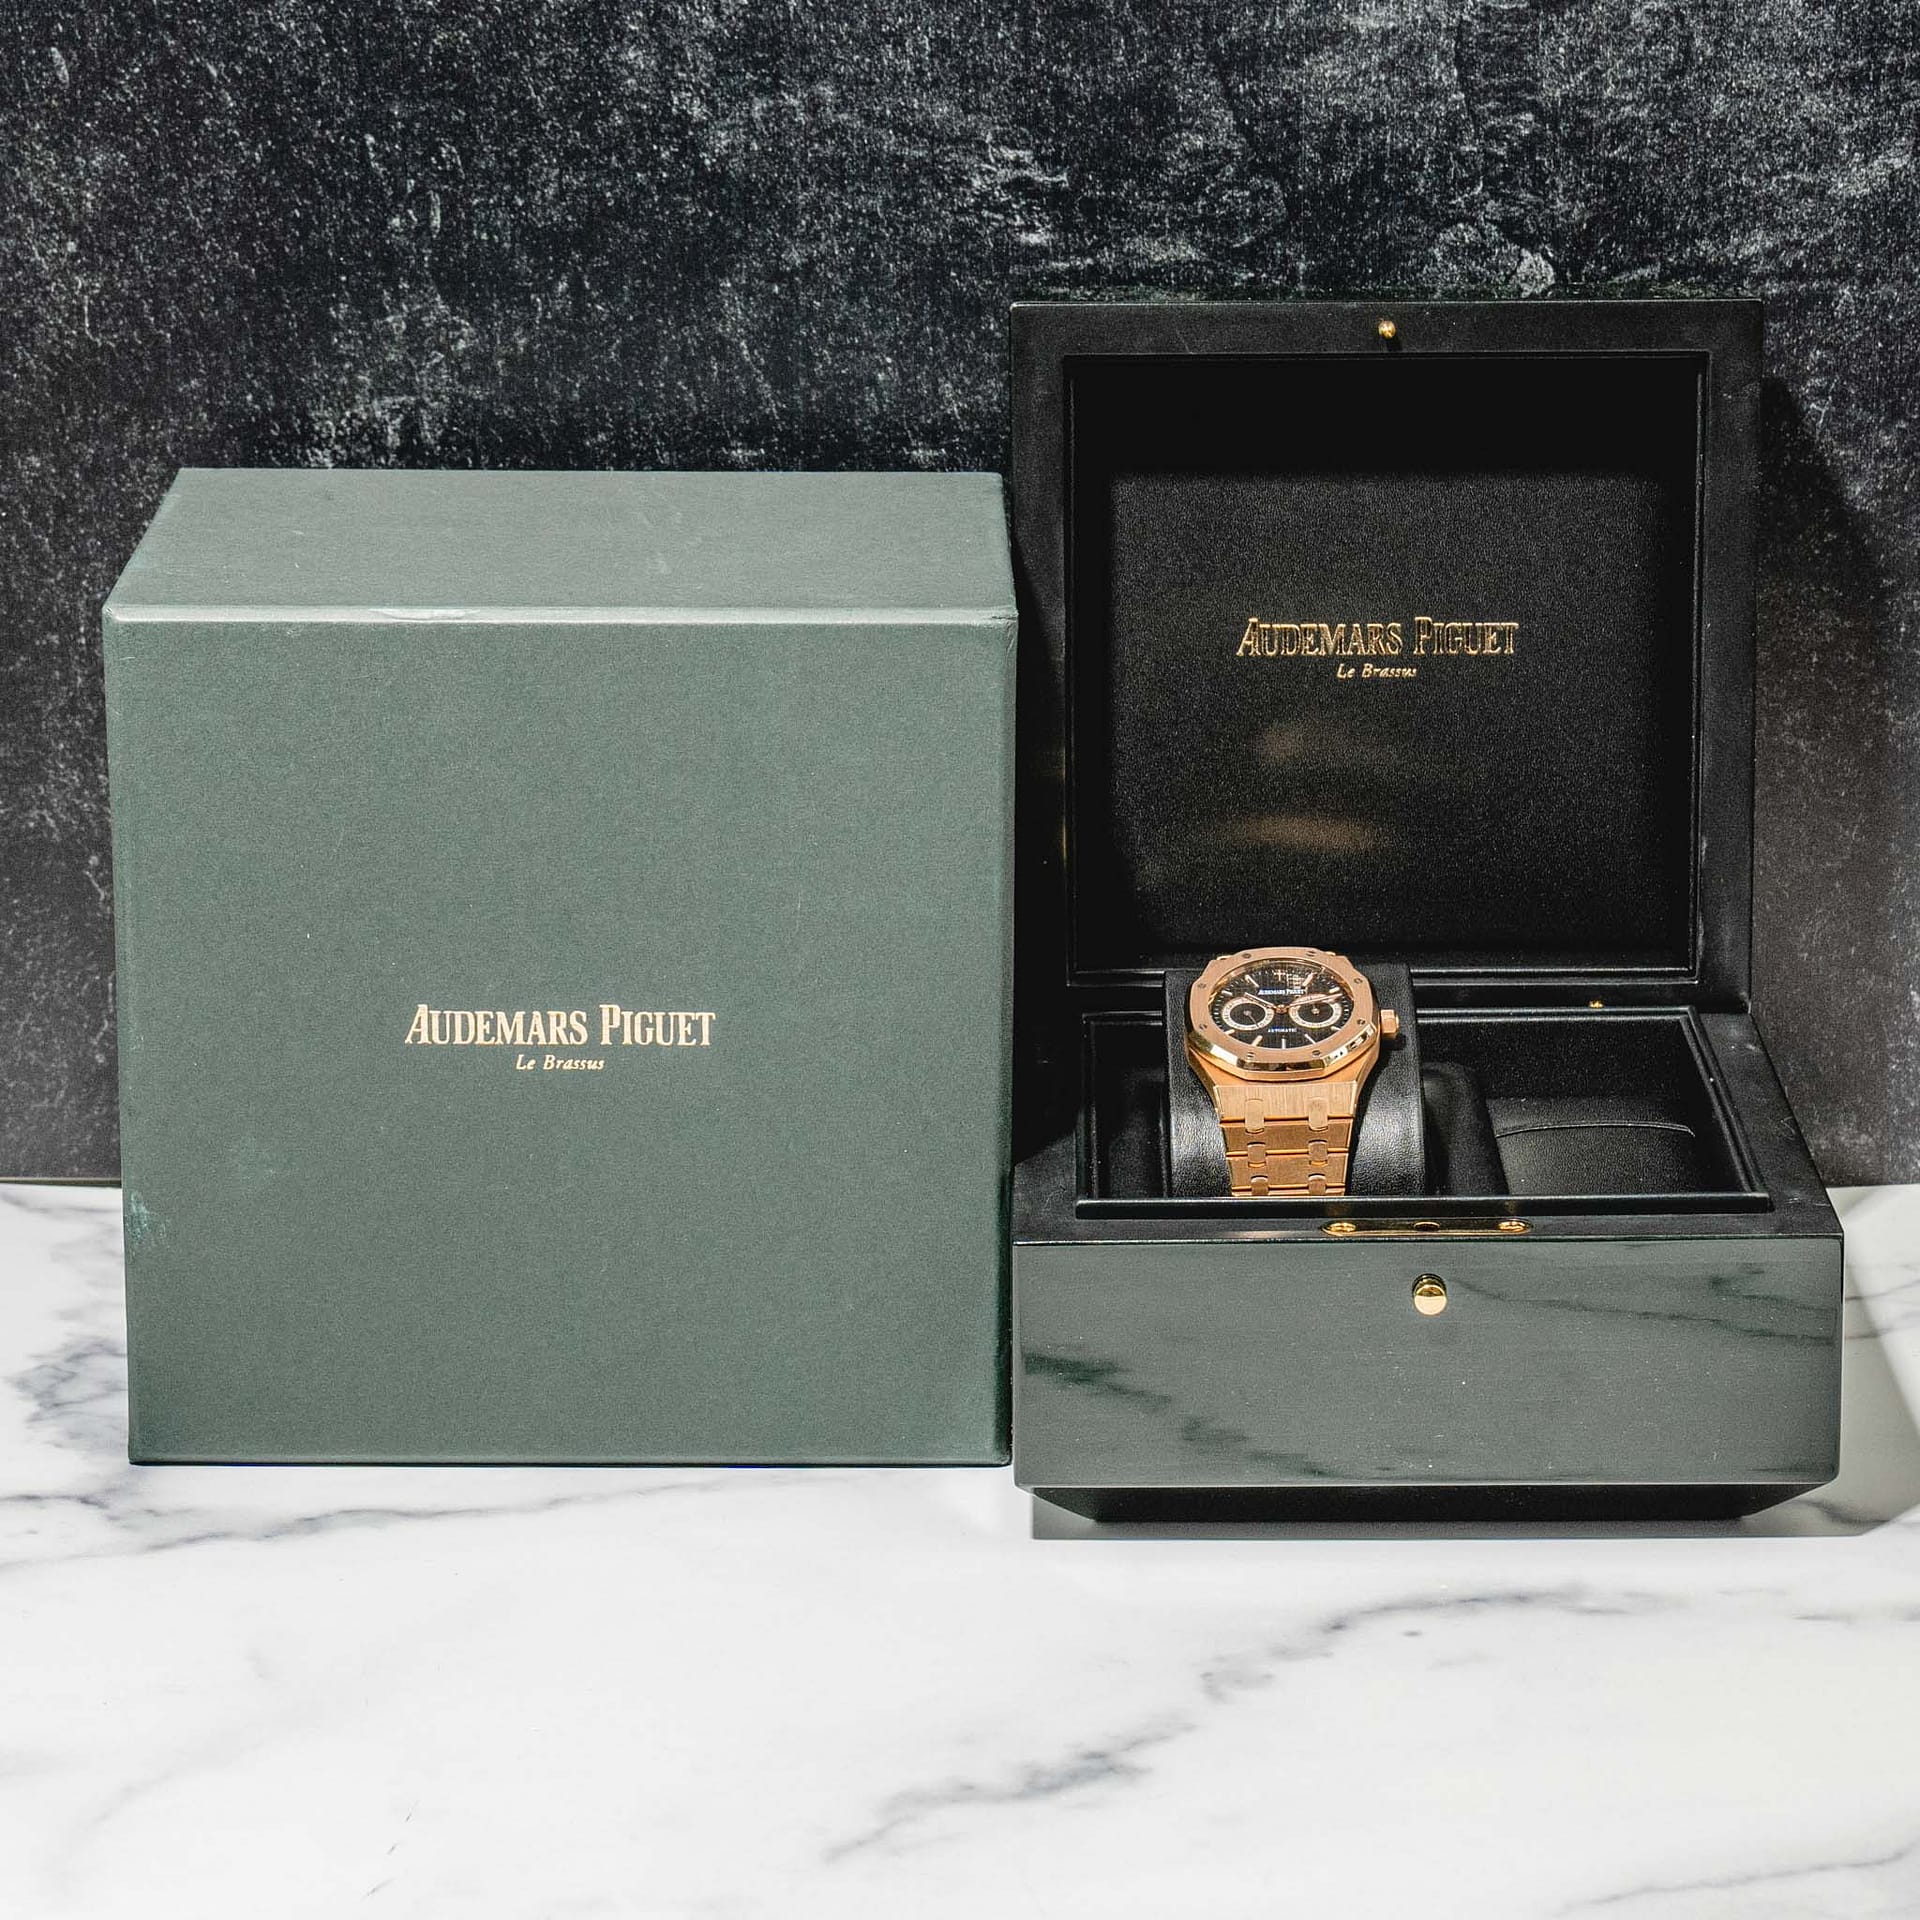 Royal Oak Offshore Certified Pre Owned Watch in Gold - Audemars Piguet